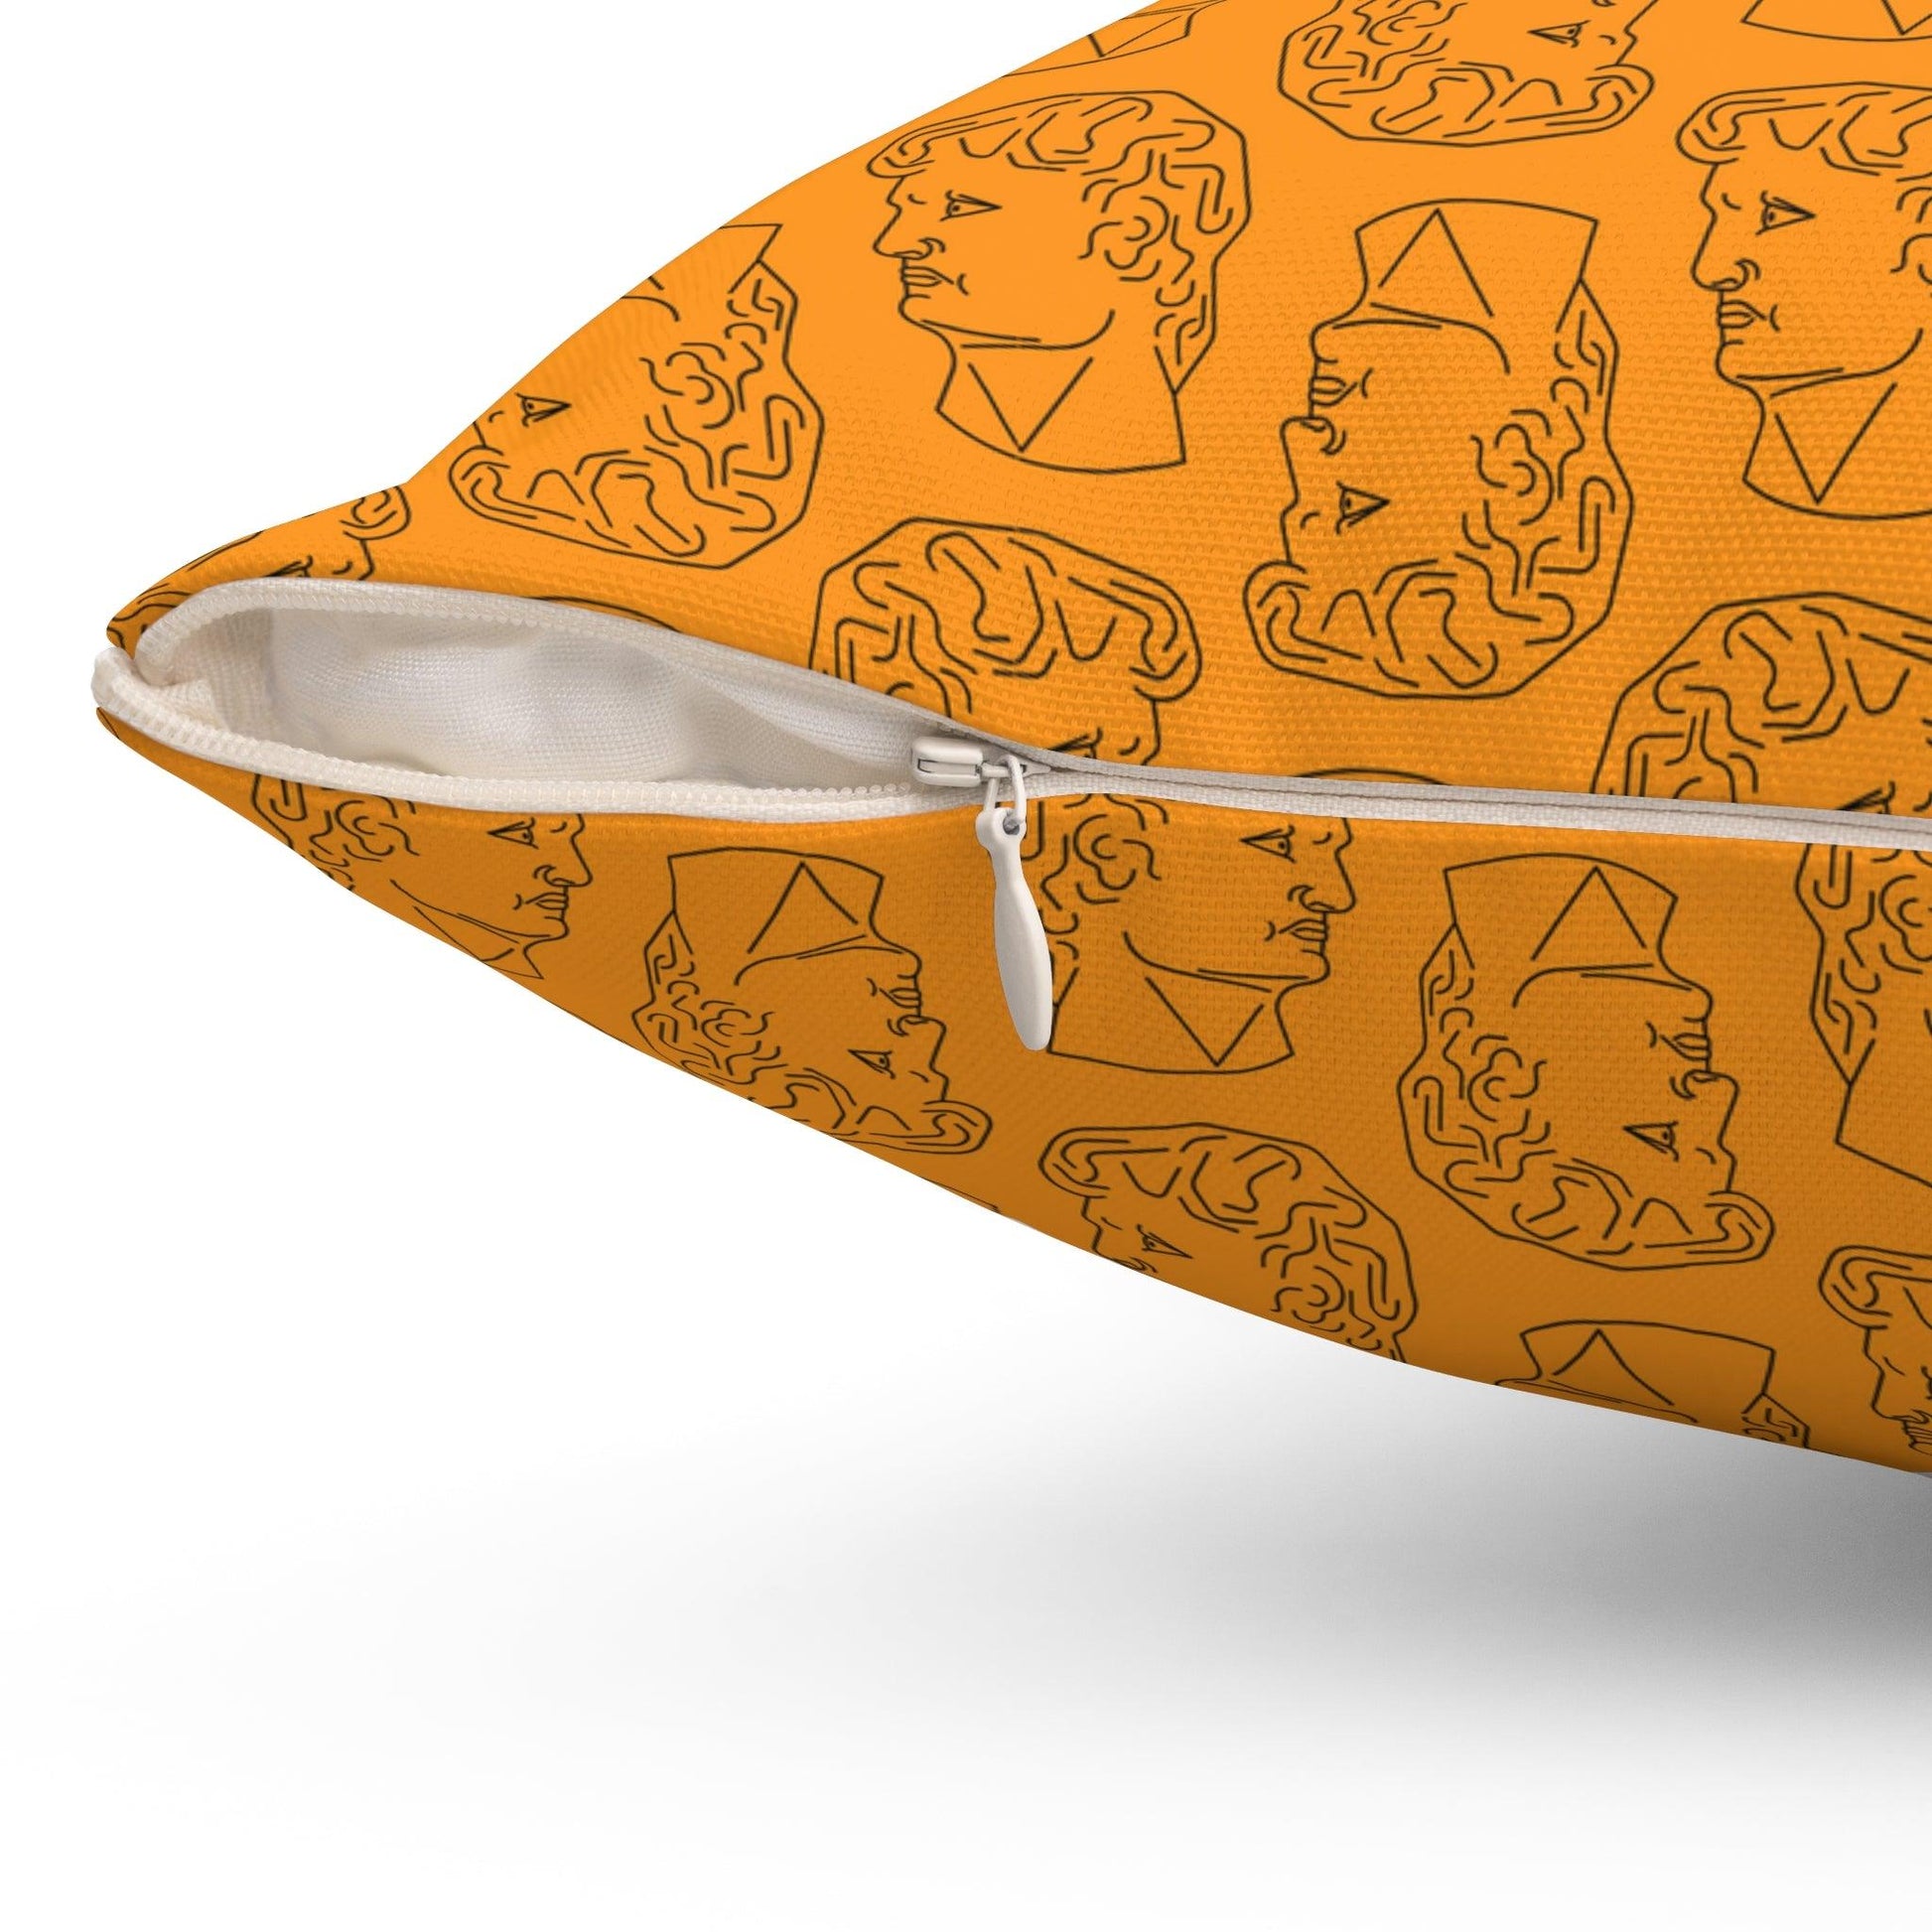 David Busts Orange Printed Throw Pillow - MAIA HOMES